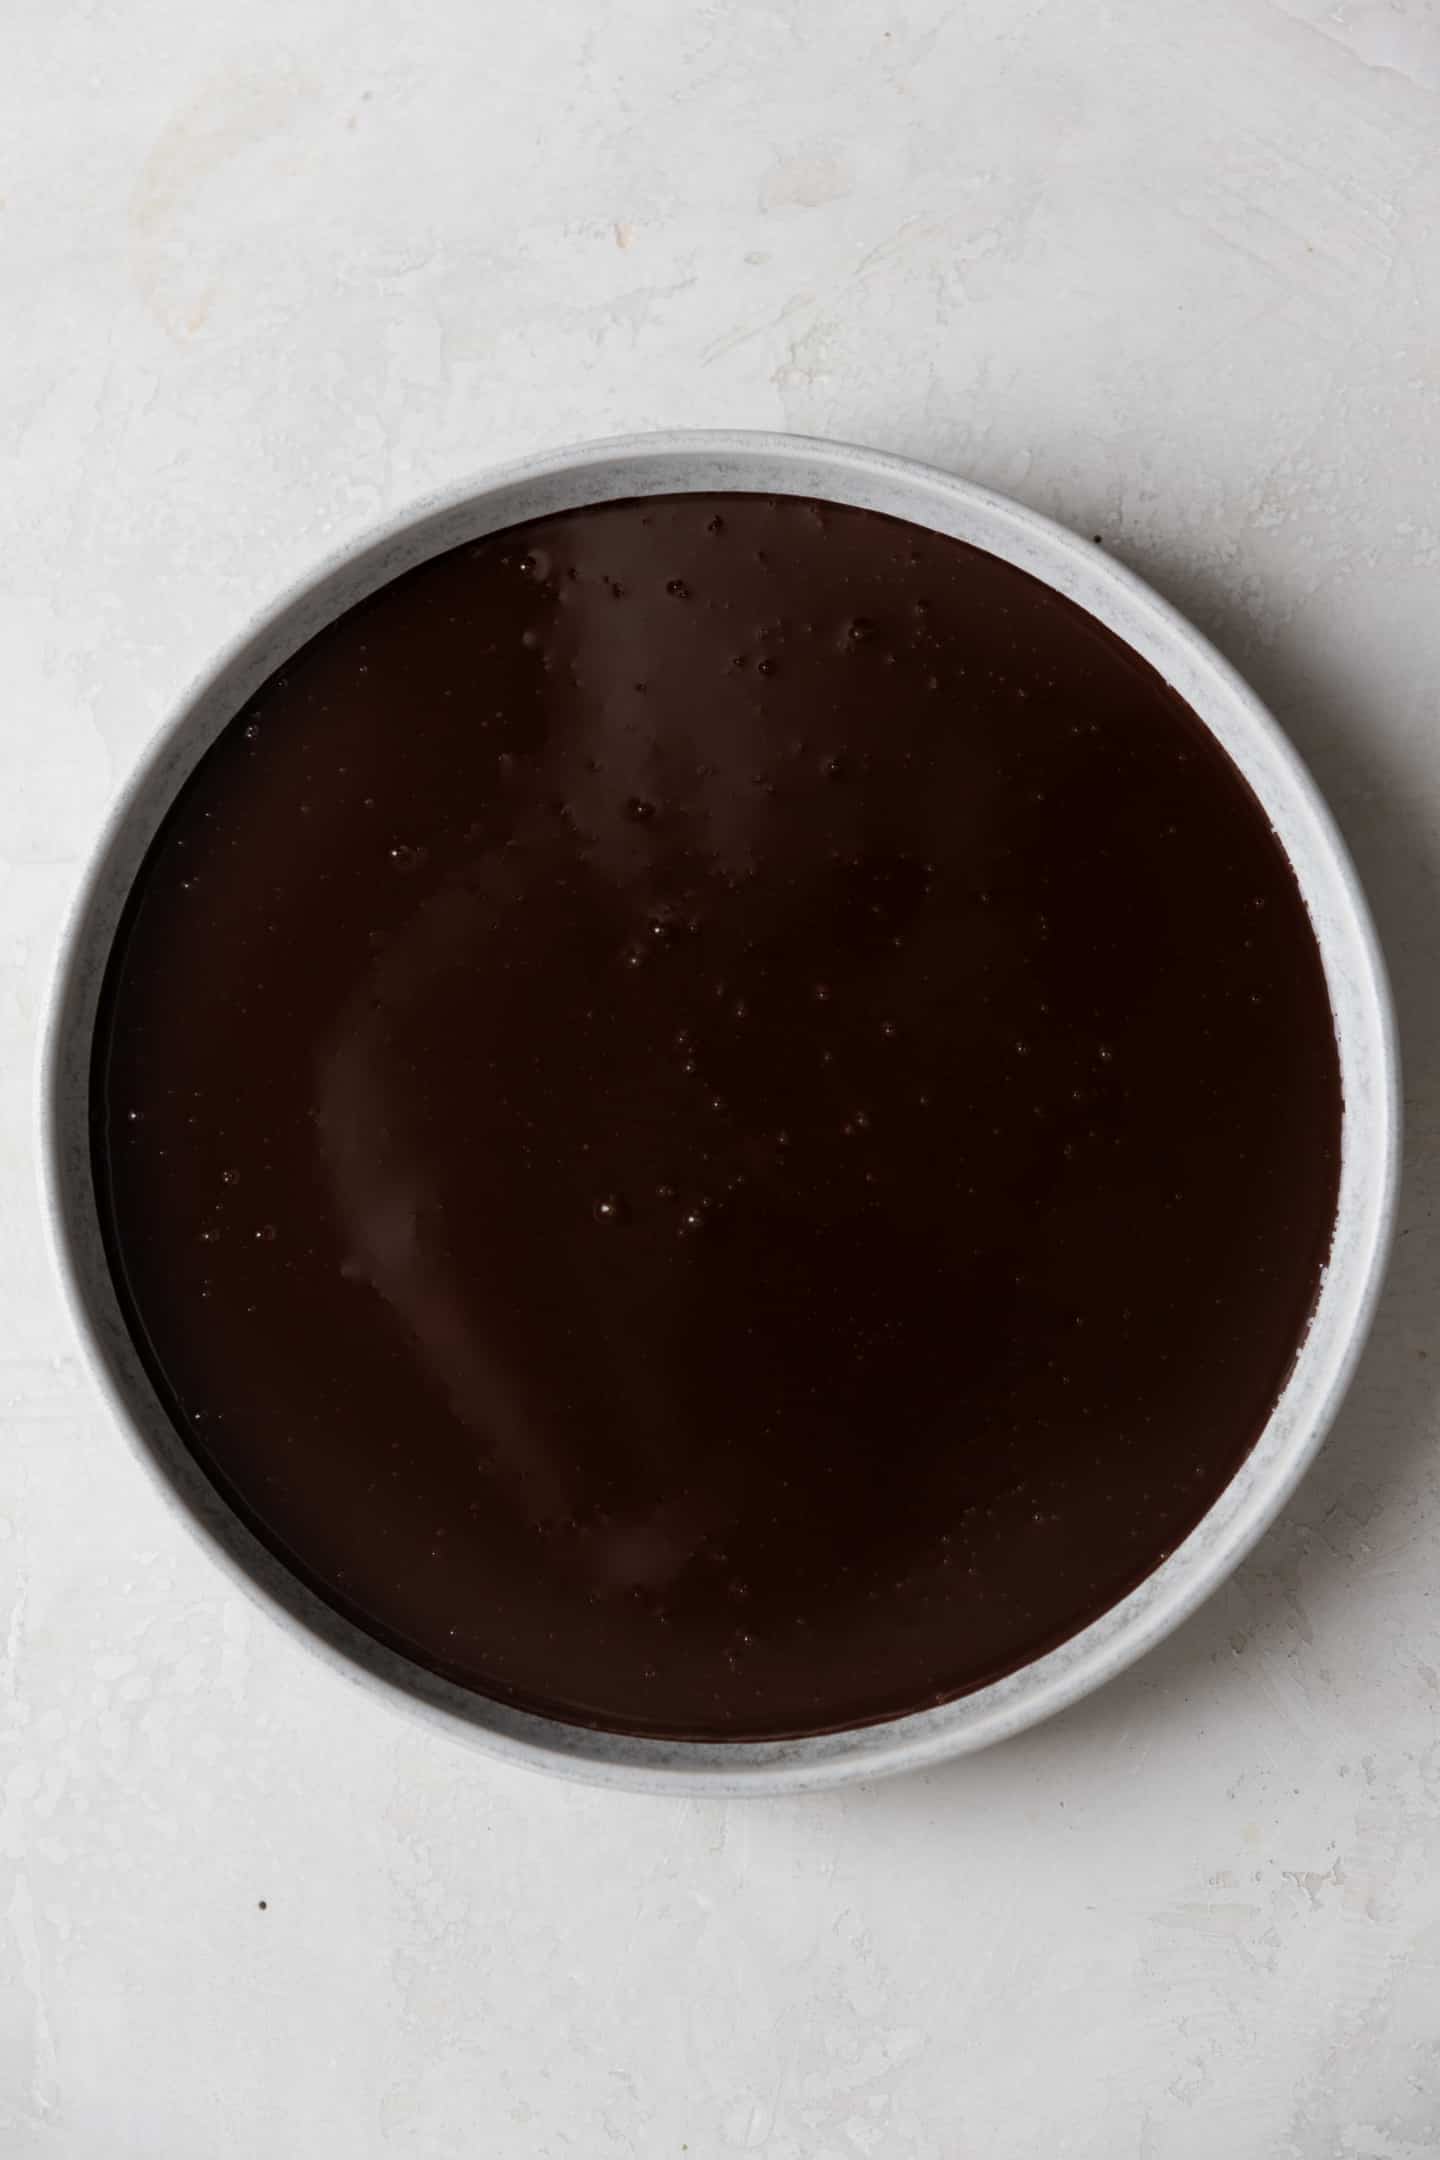 Chocolate ganache in a shallow white bowl.